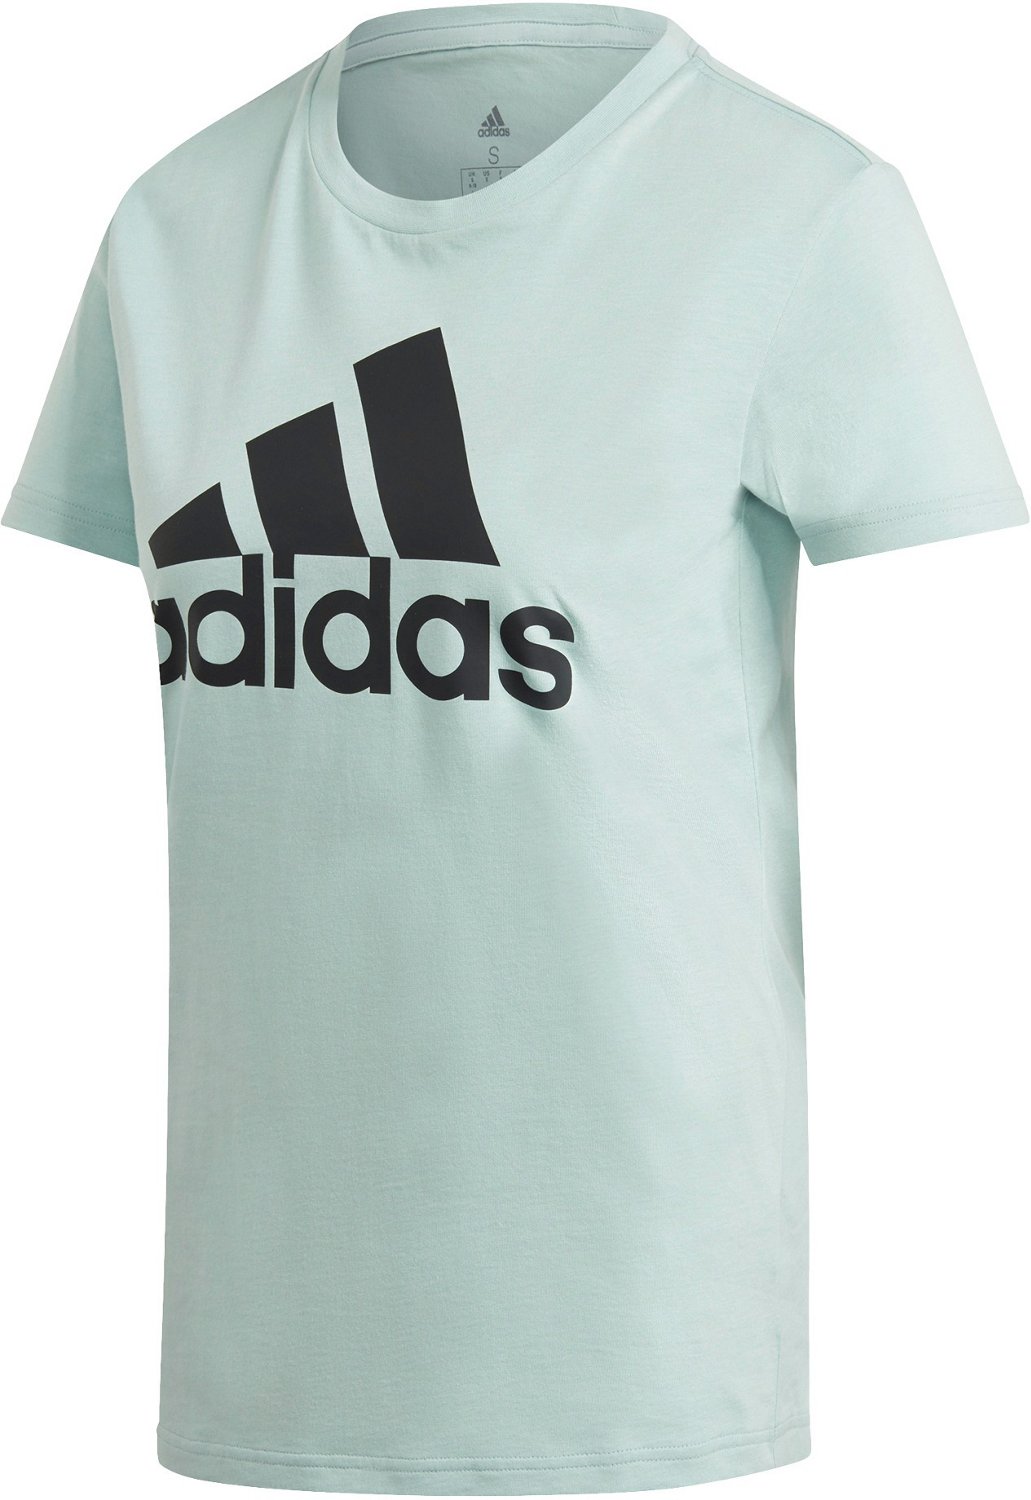 academy adidas shirts